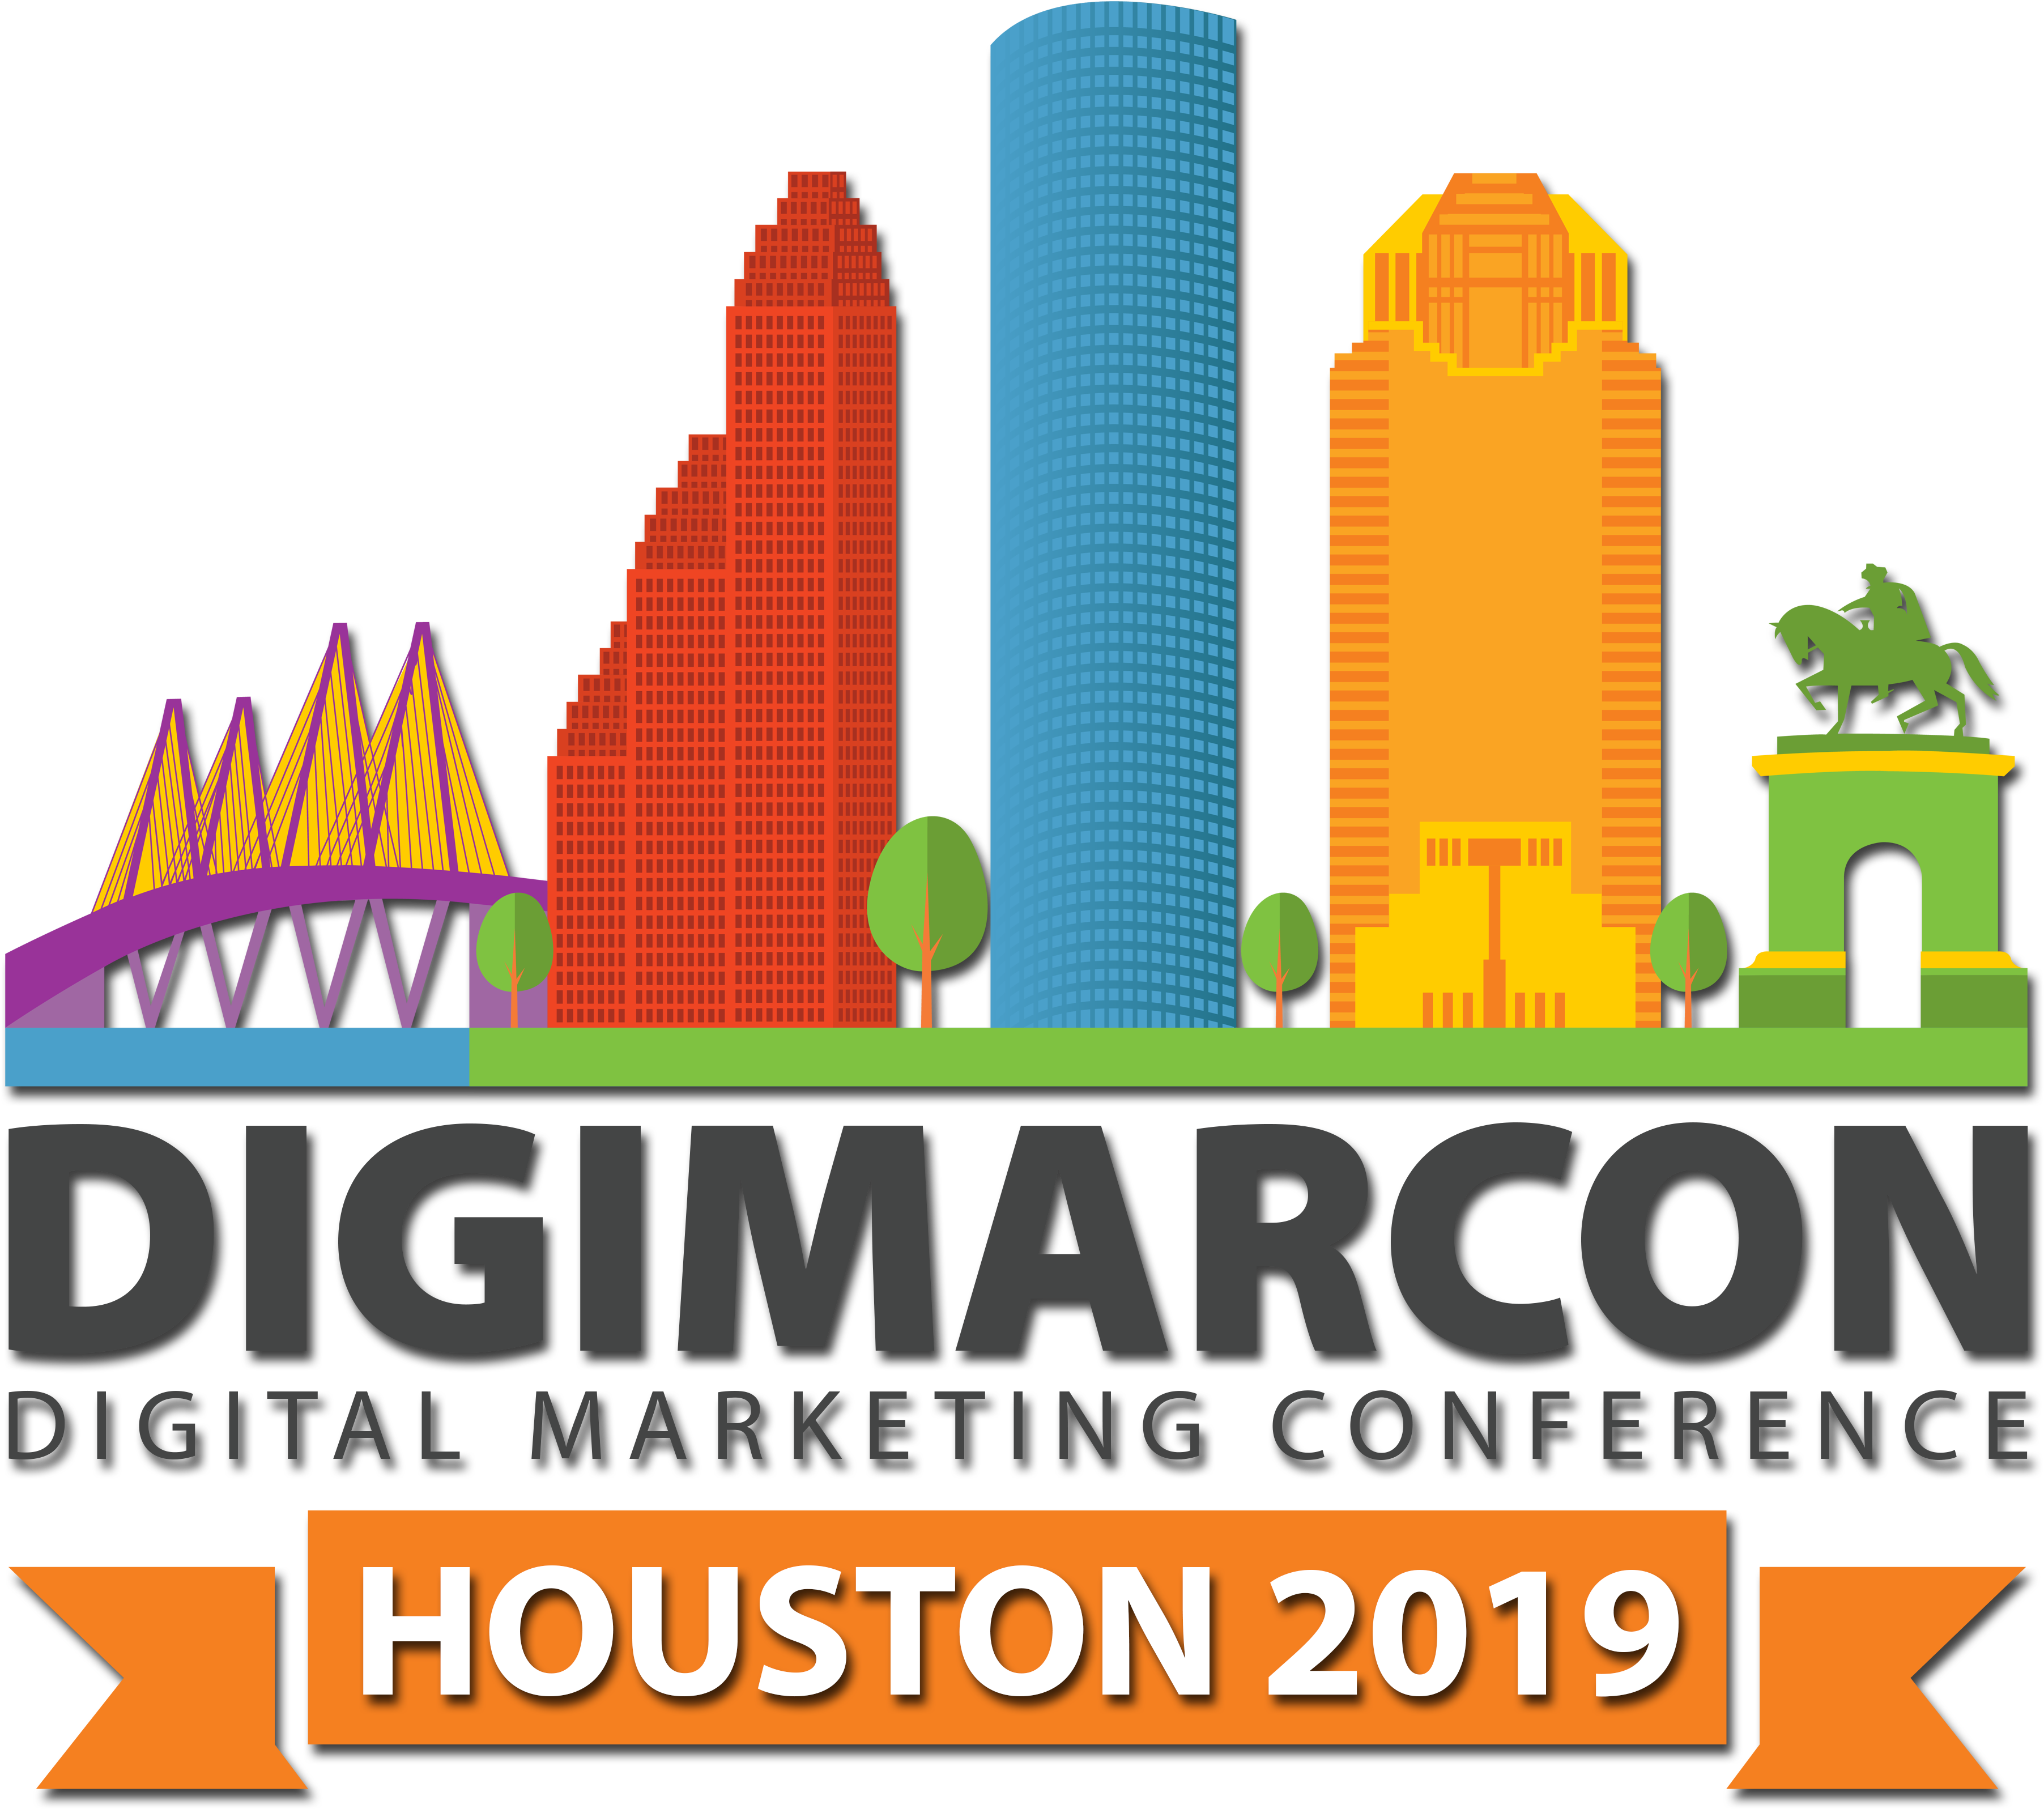 Digimarcon Houston 2019 Digital Marketing Conference - Digital Marketing (3800x3800), Png Download